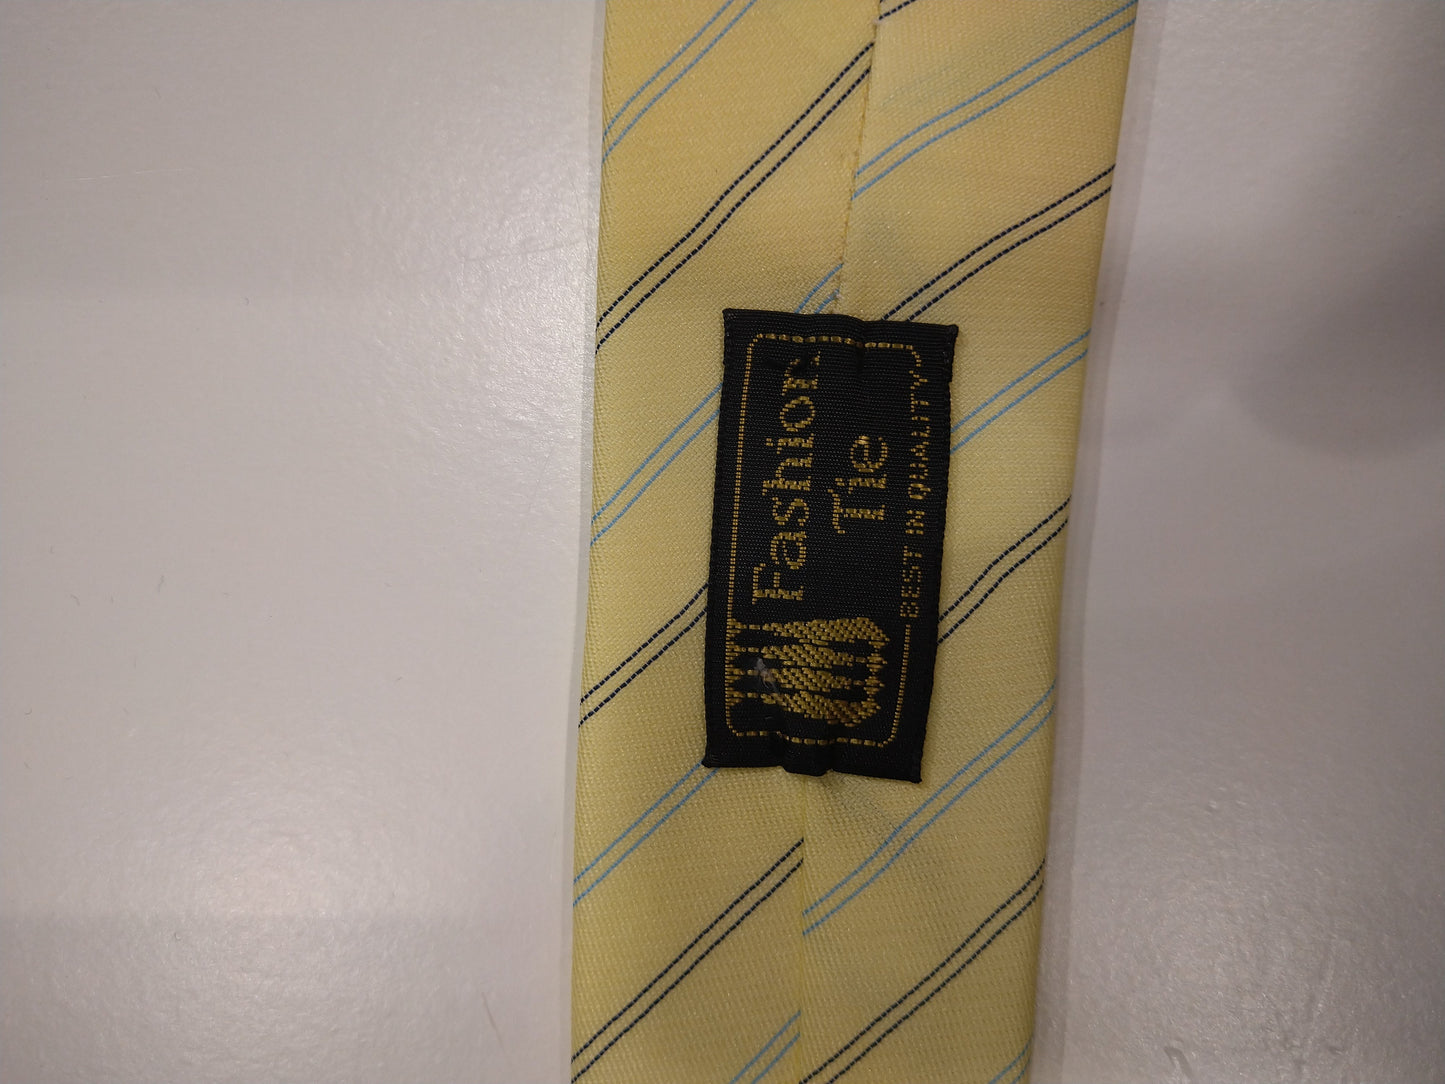 Modekrawatte Vintage Extra Enge Krawatte. Gelb blau schwarz gestreift.